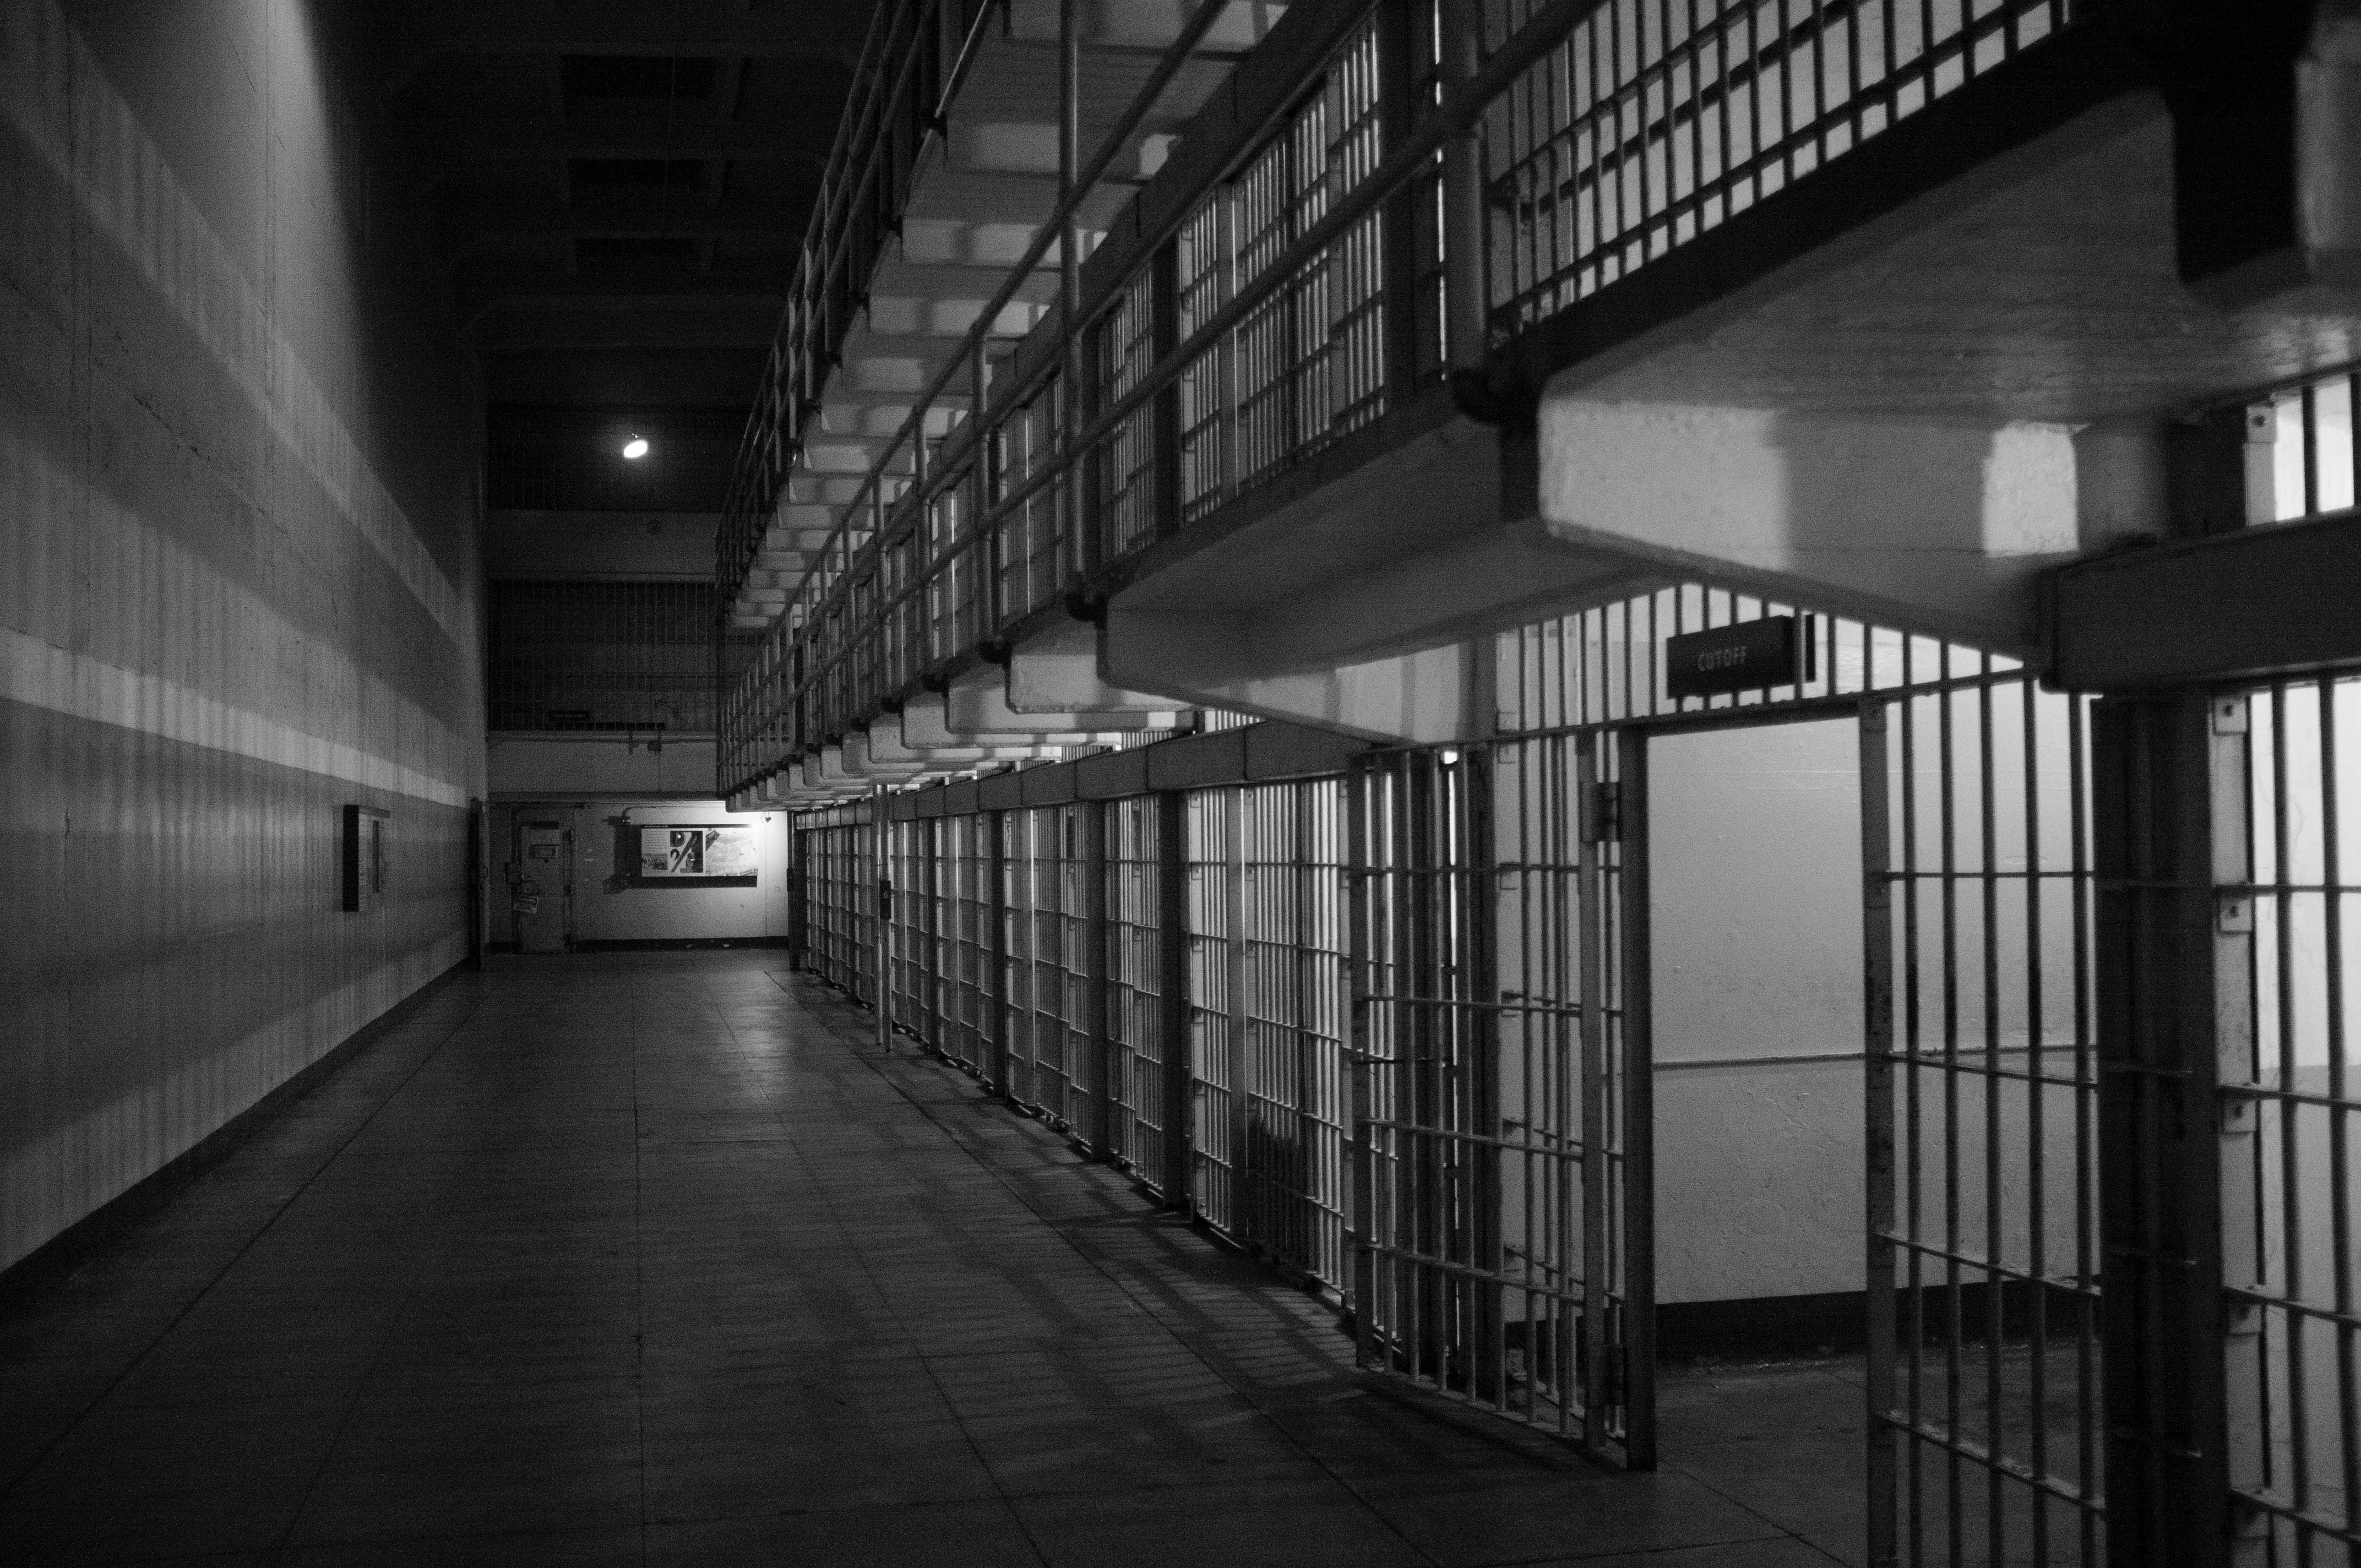 Prison; image by Emiliano Bar, via Unsplash.com.